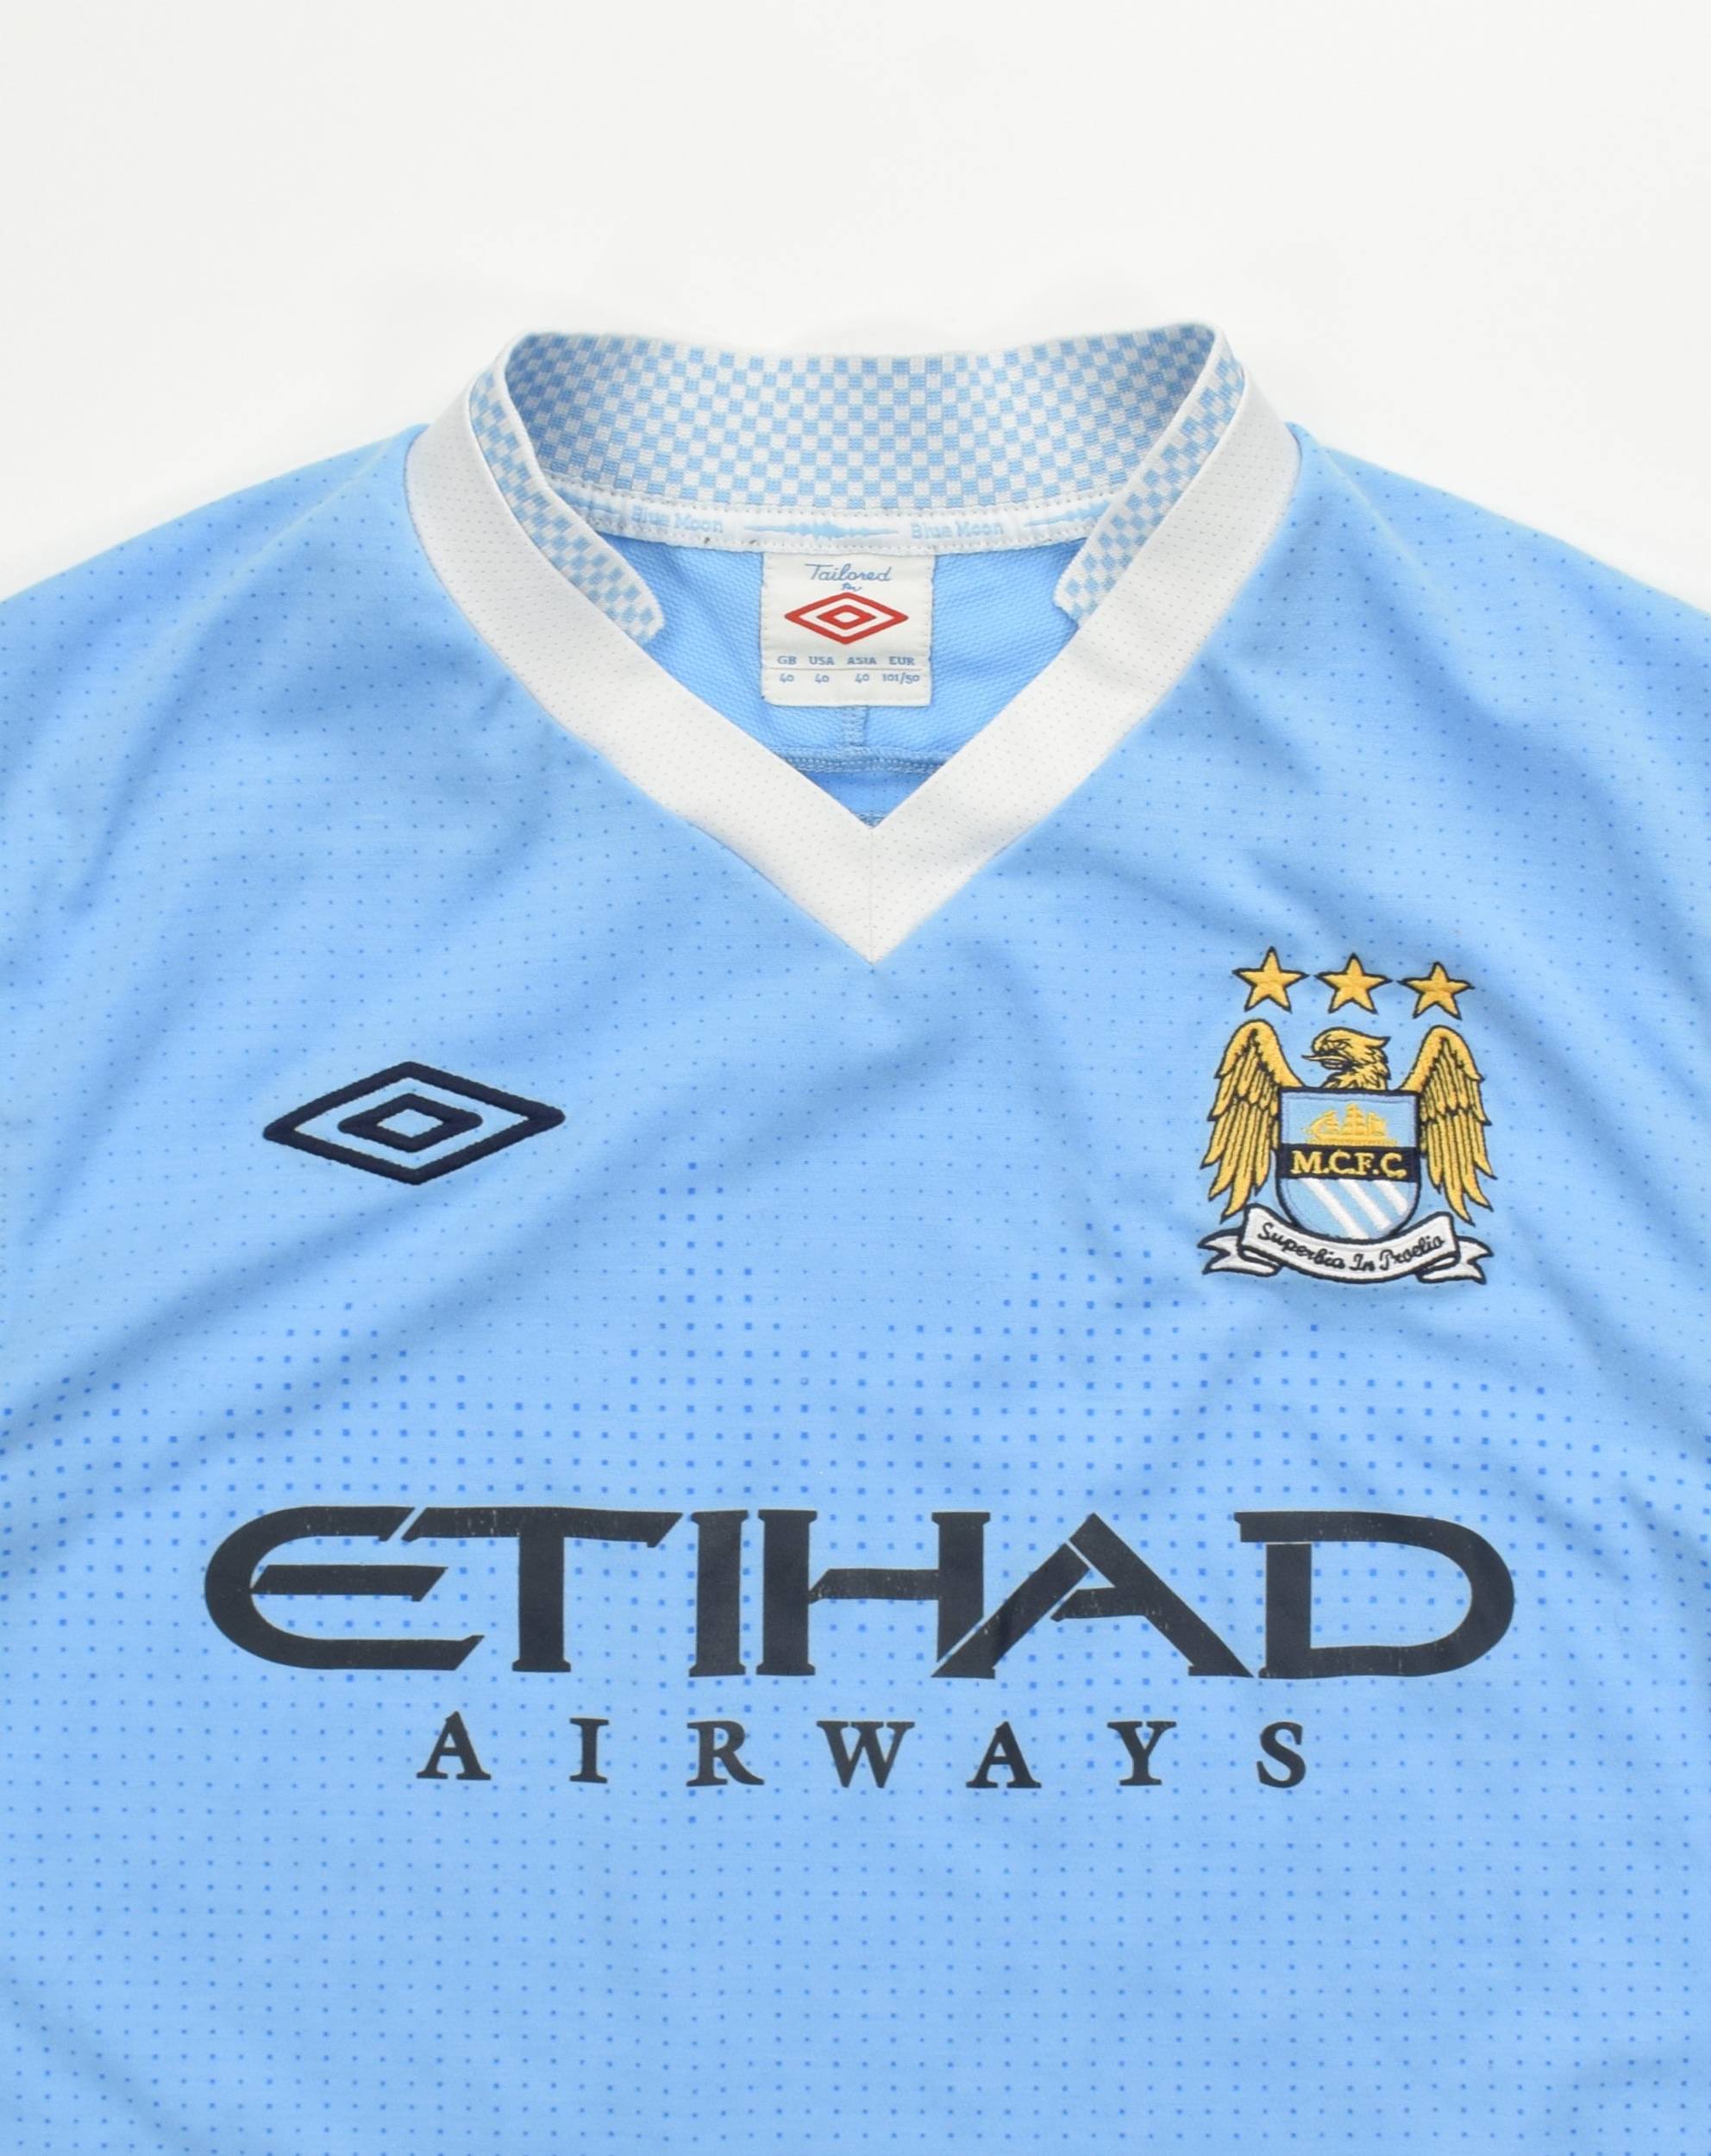 22.00 - Manchester City Jersey 11/12 History Retro Football Kits 2011 2012  Soccer Team Shirt 